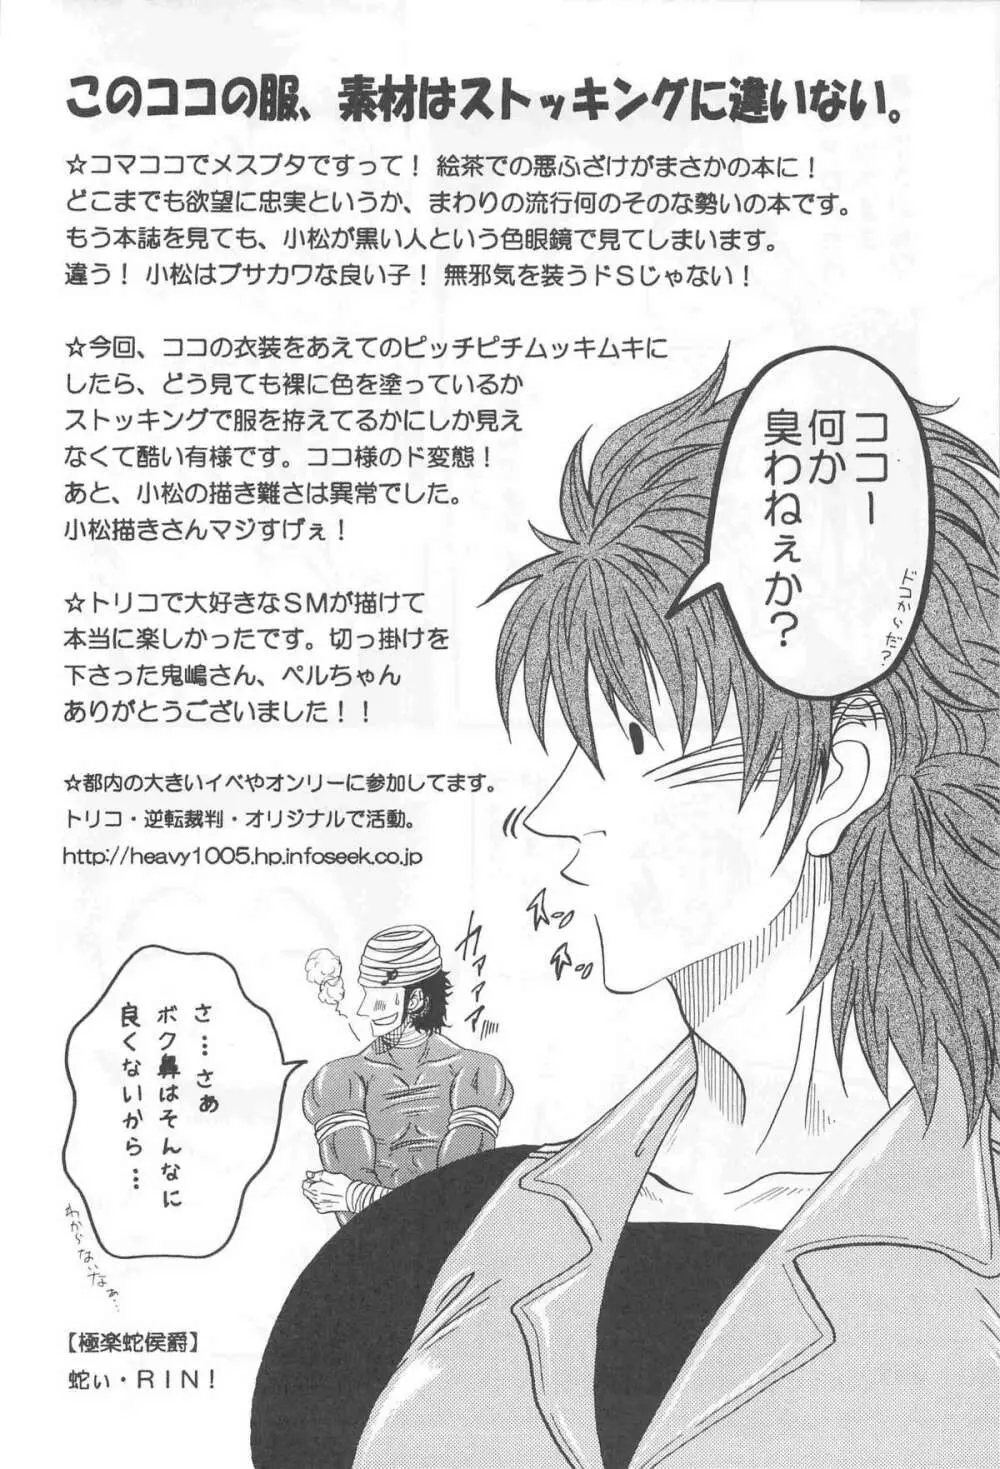 [Kijima Hyougo,Jun’ai Meringue-don,RIN!] [msbt] (Toriko) 24ページ